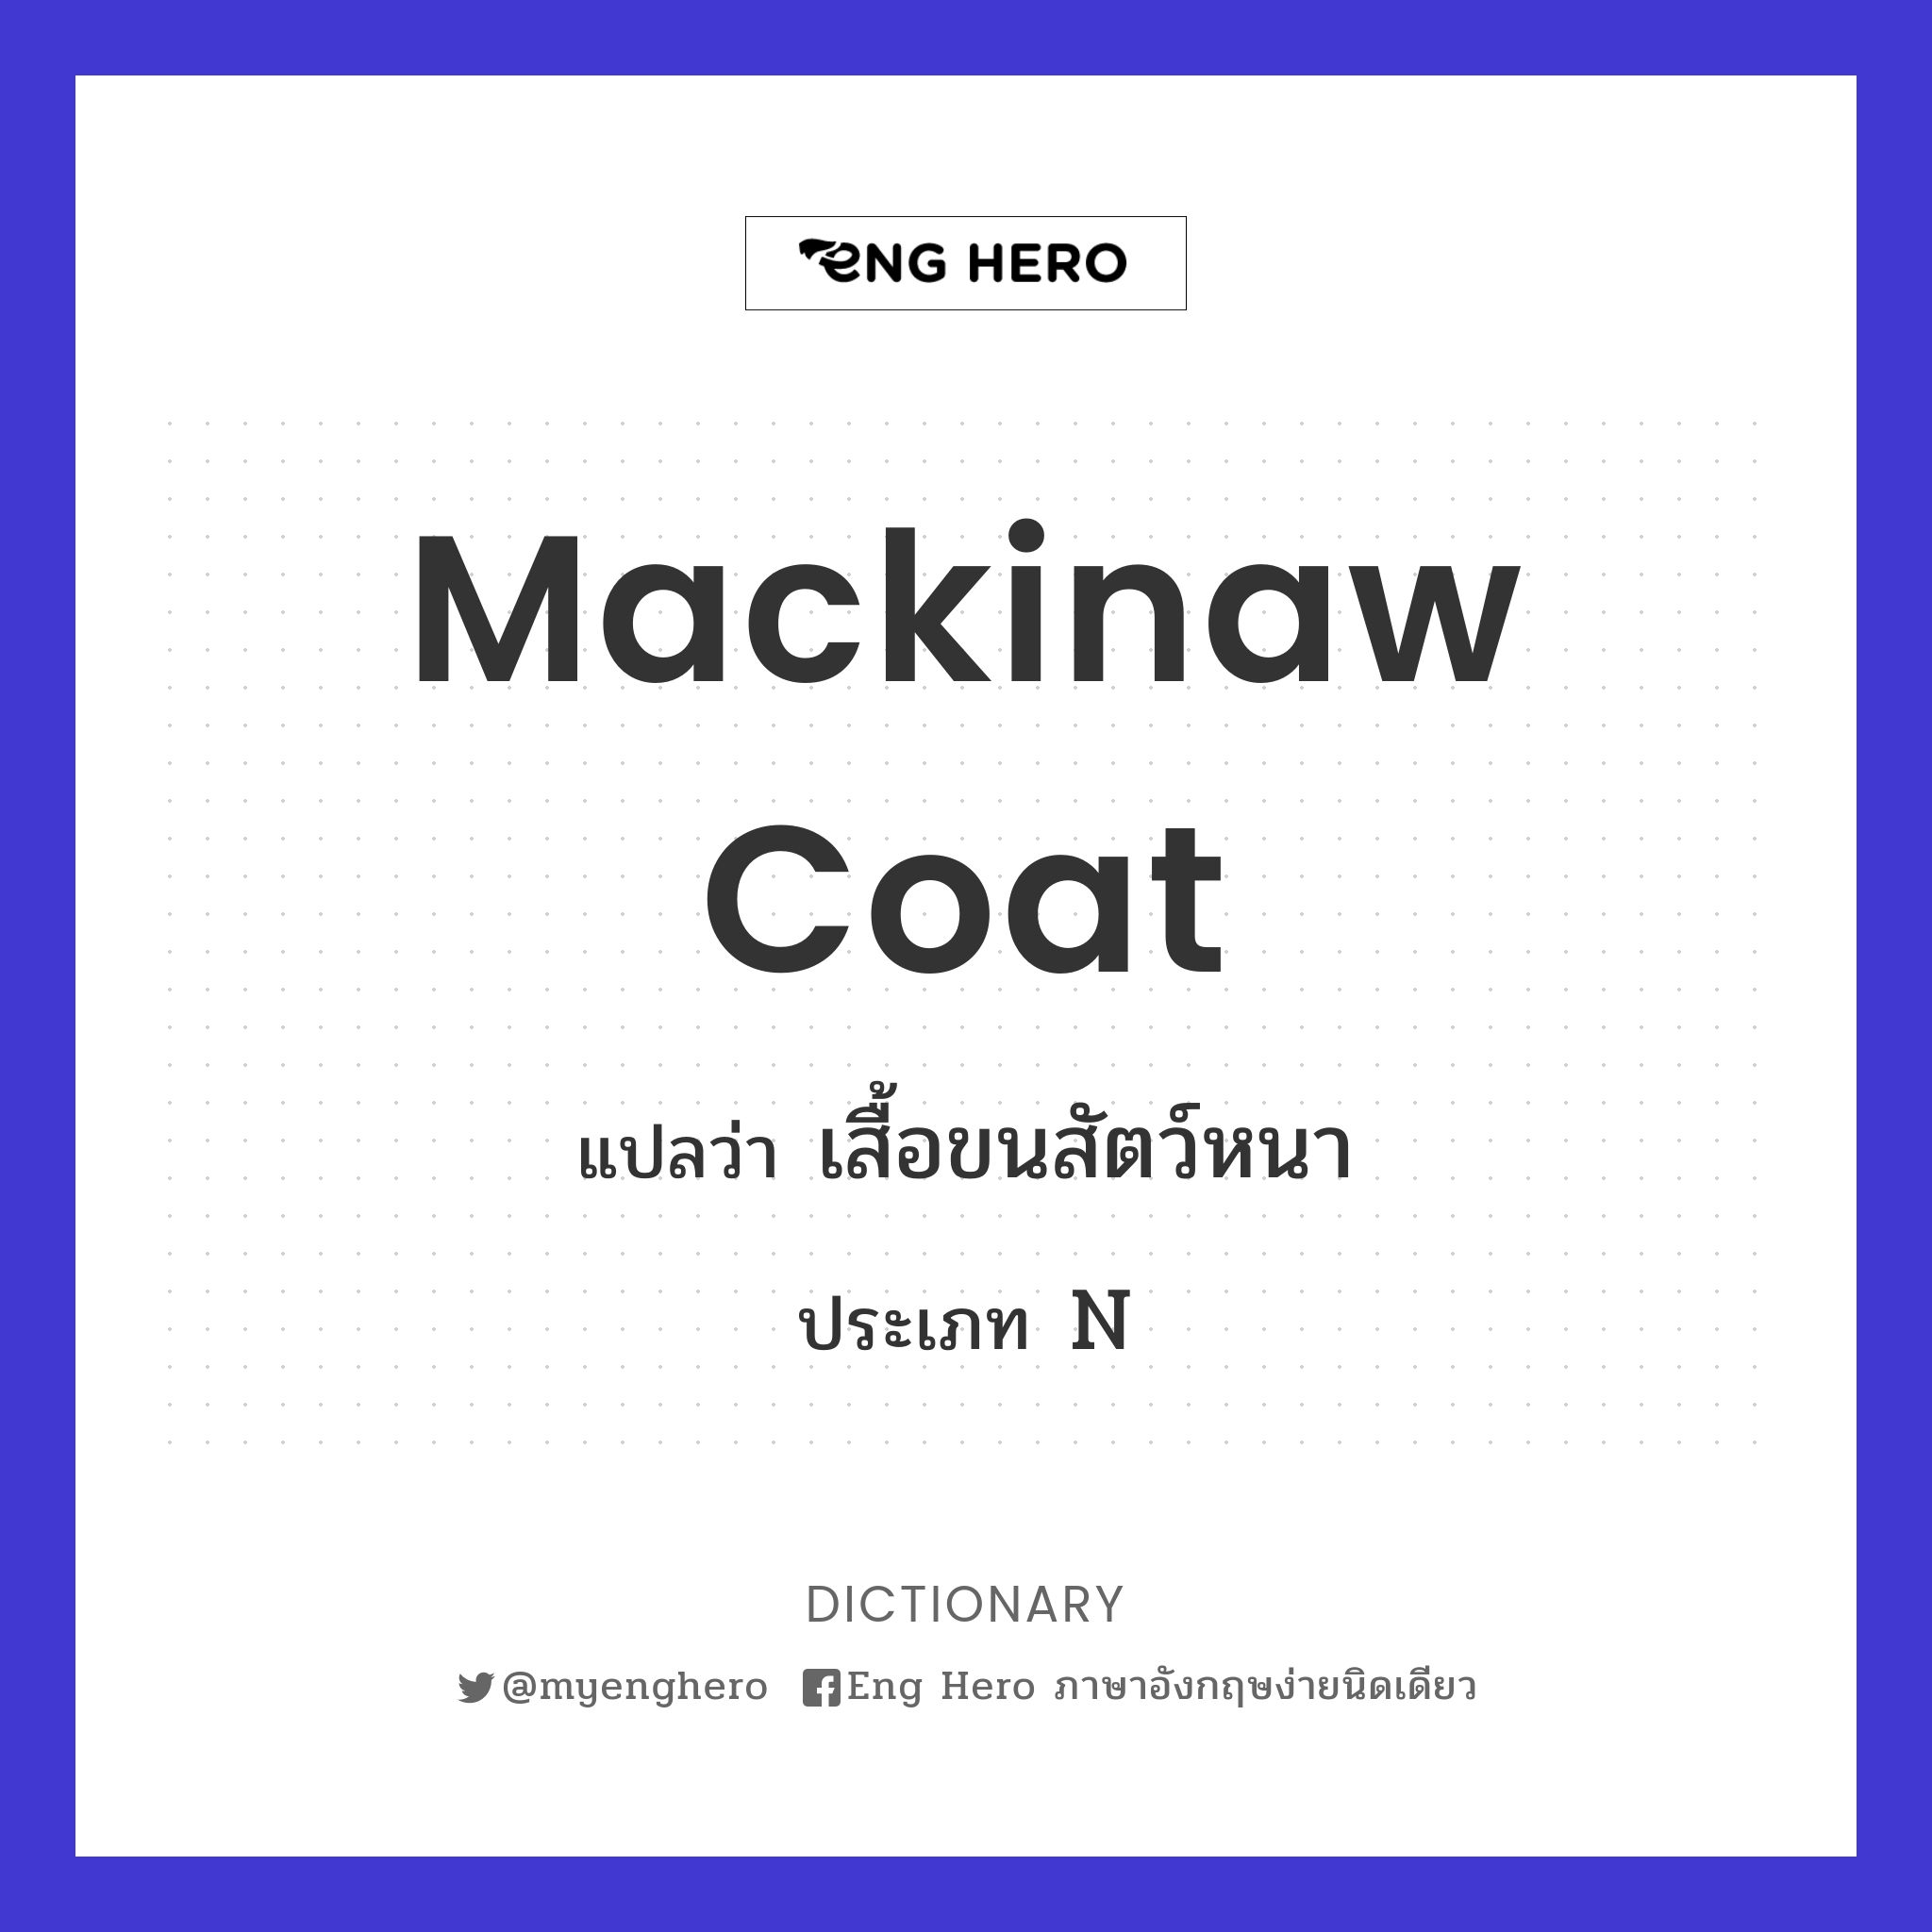 Mackinaw coat